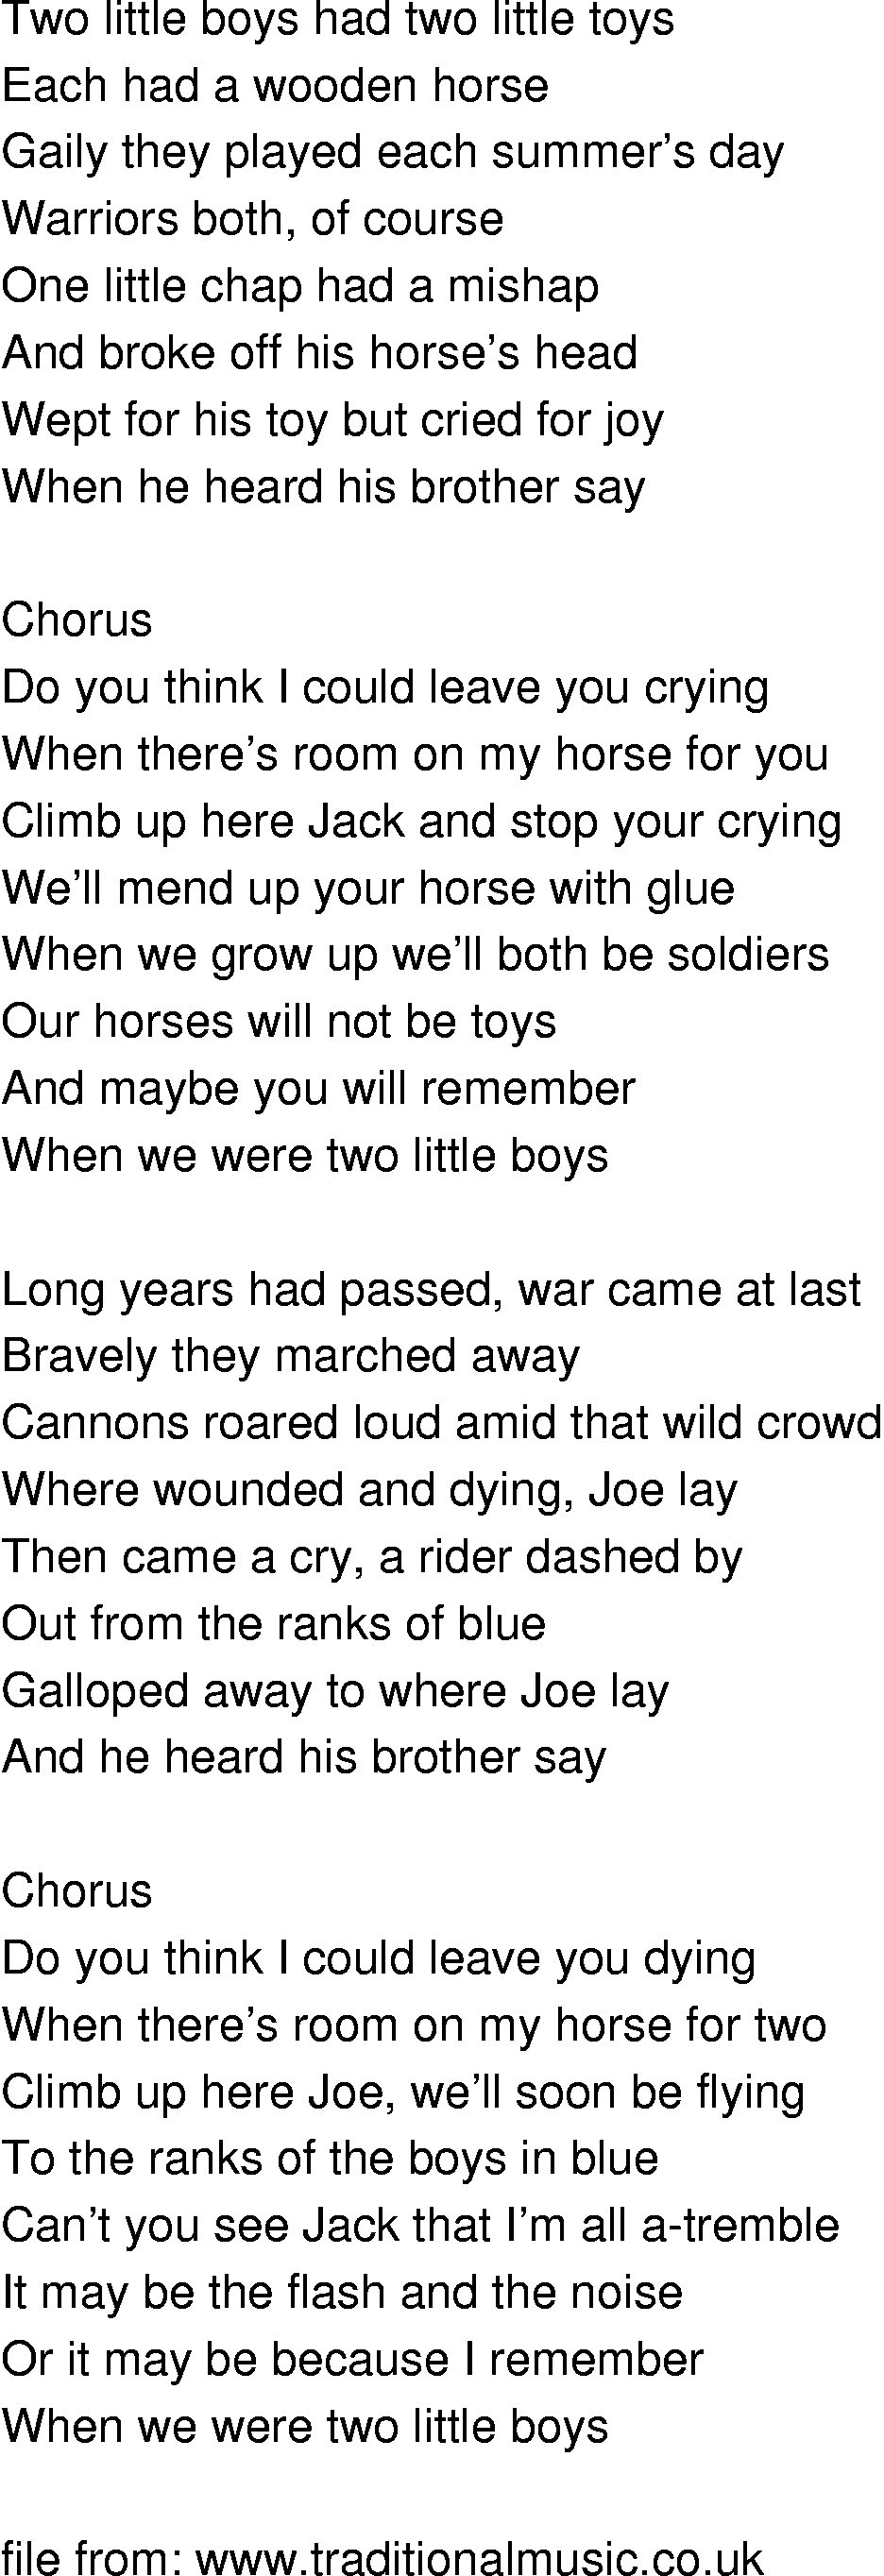 Old-Time (oldtimey) Song Lyrics - two little boys